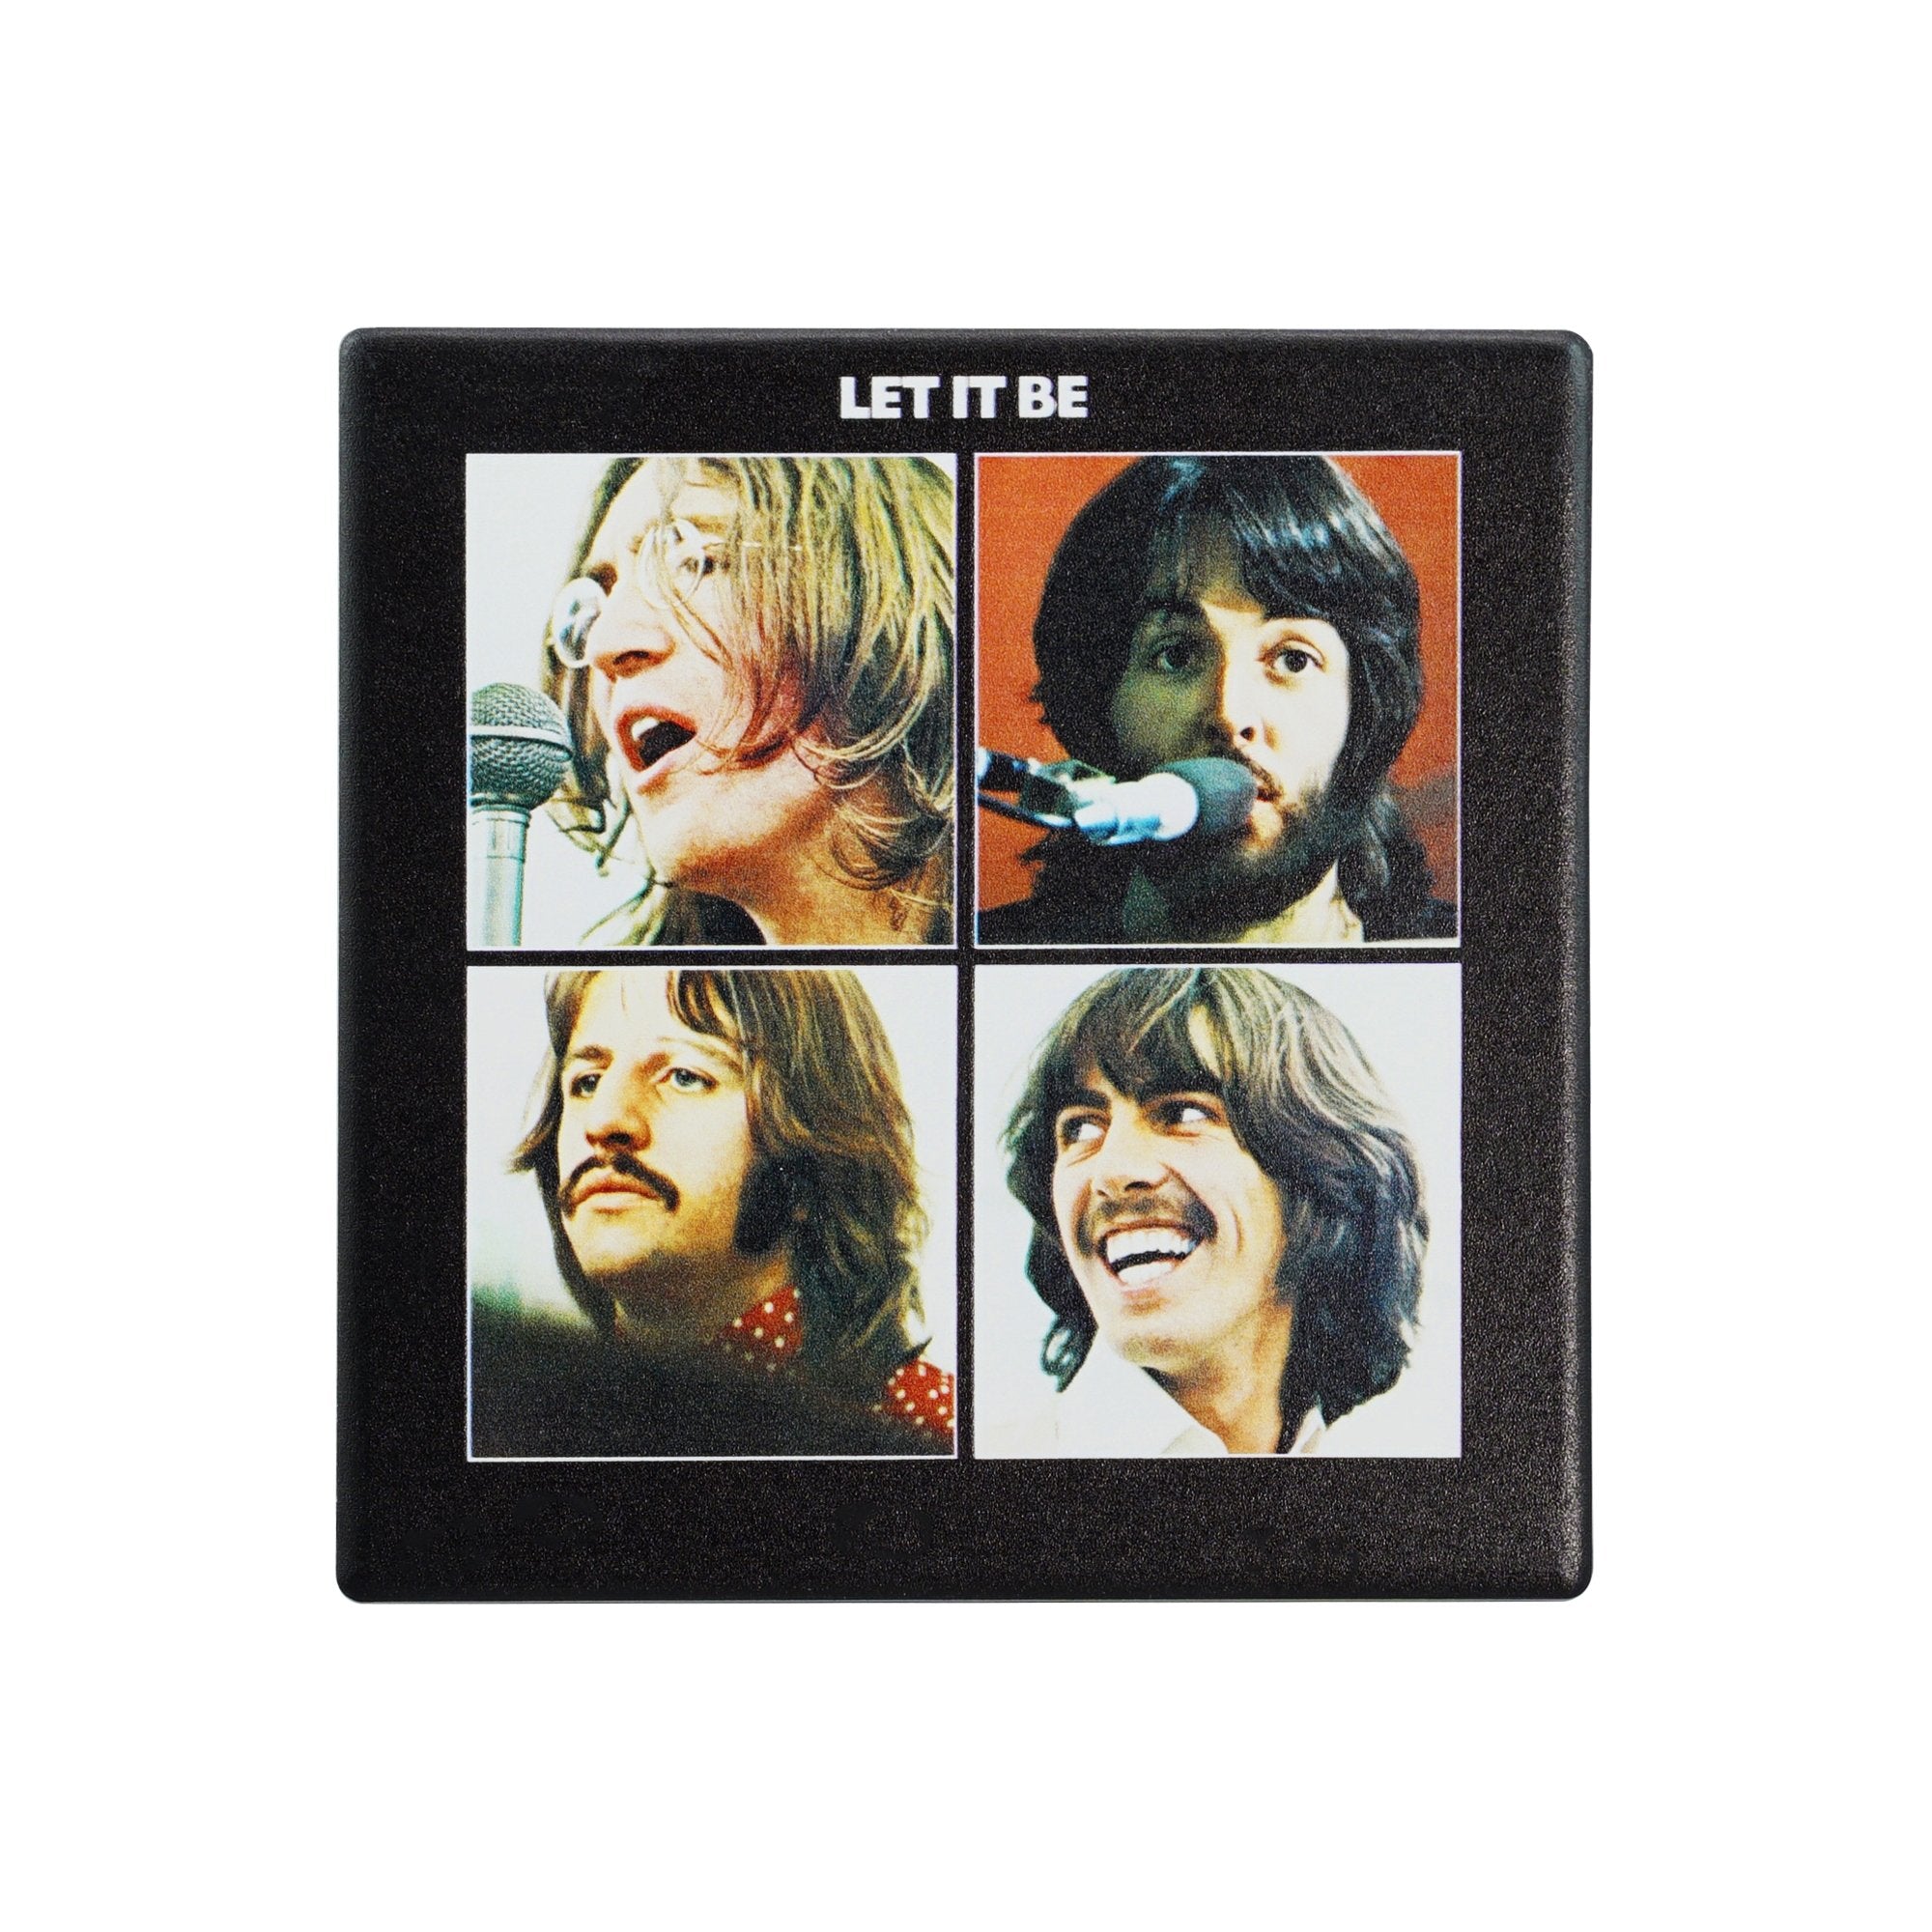 Coaster Single Ceramic - The Beatles (Let it Be)